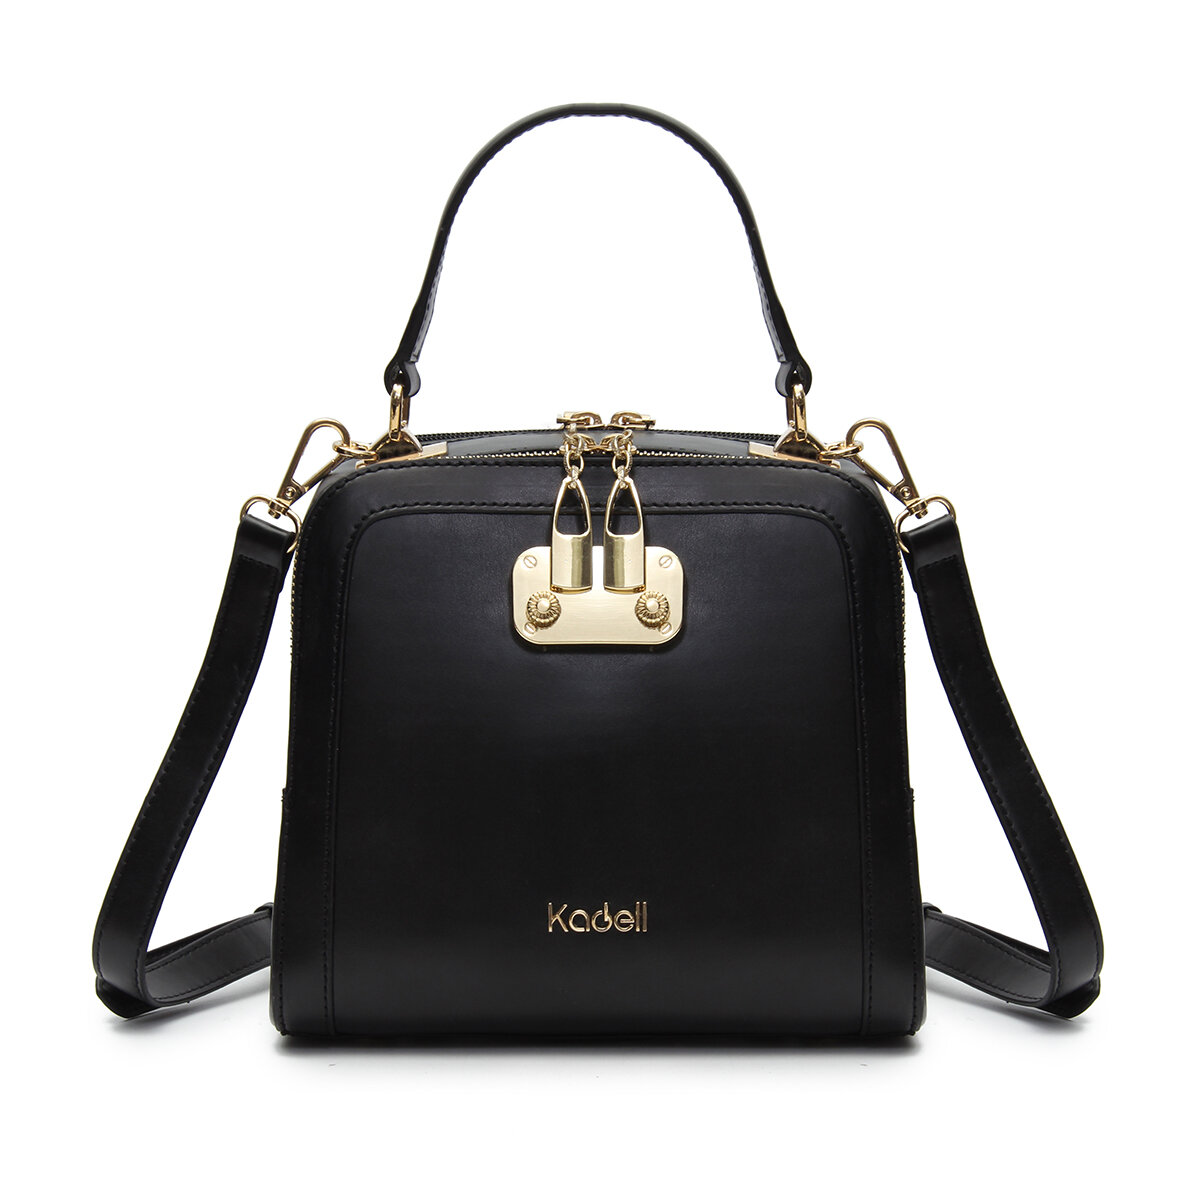 Kadell PU Leather Candy Color Handbag Shoulder Bag Crossbody